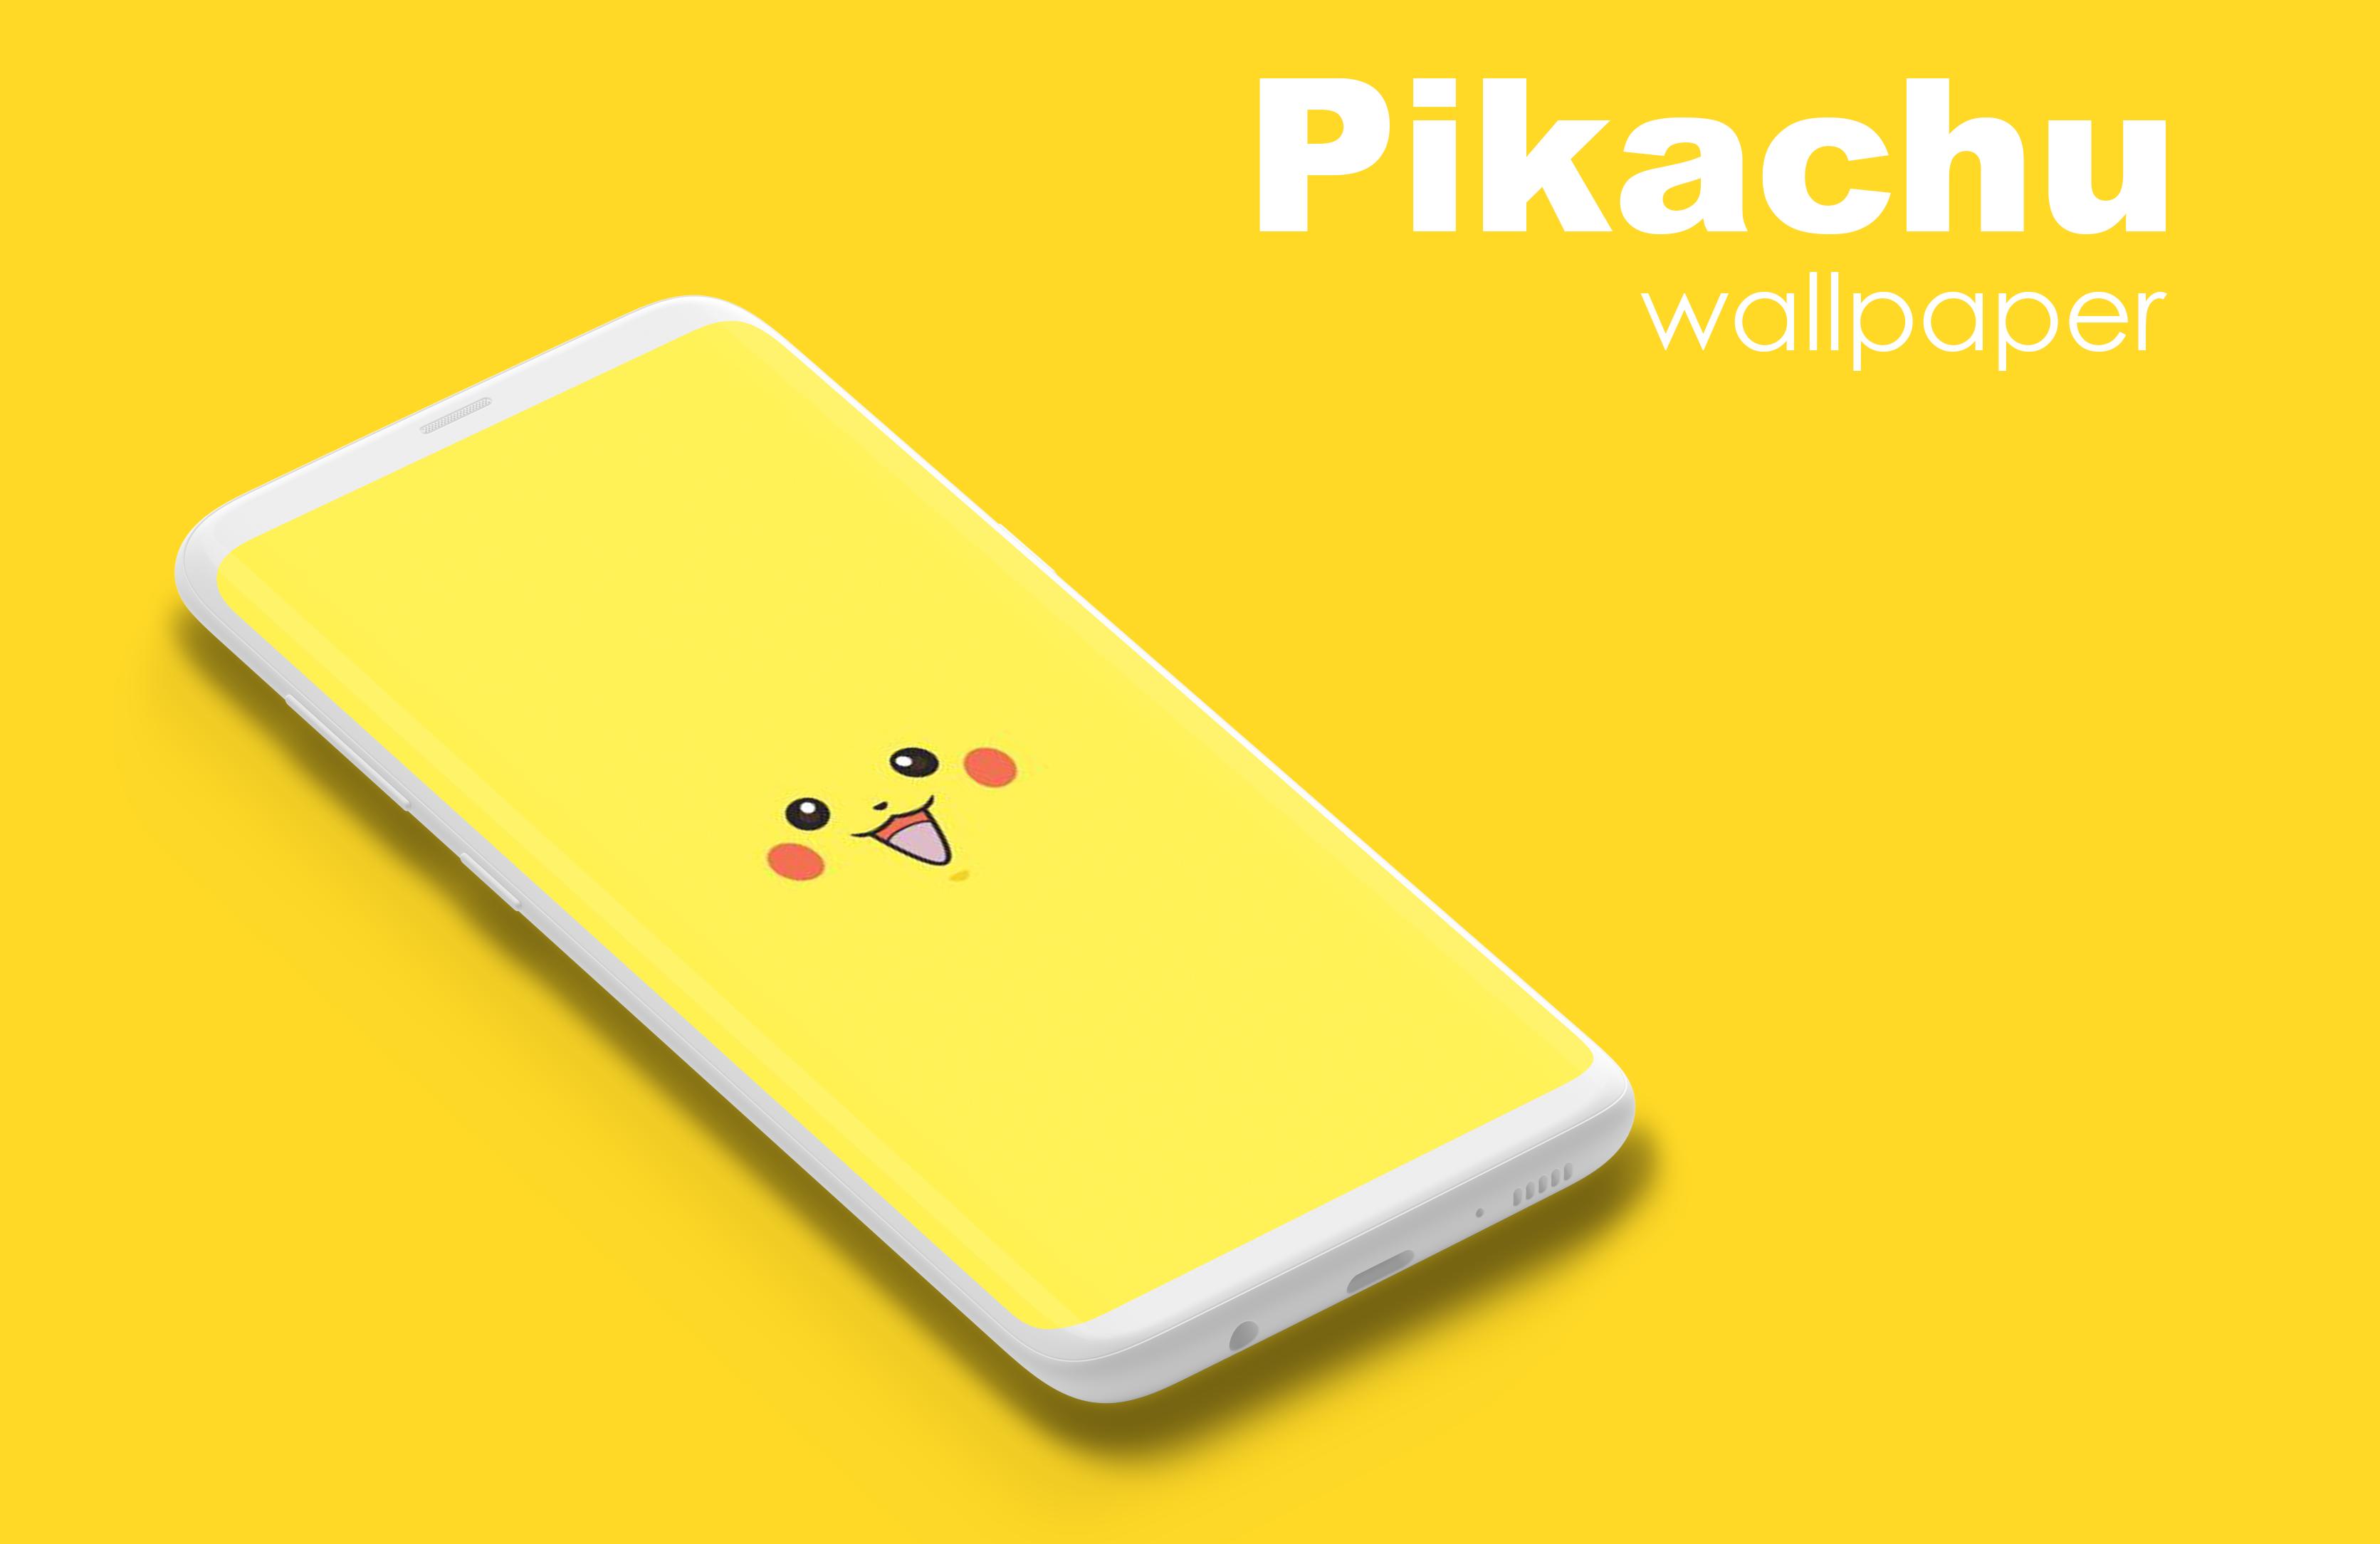 Pika Art Wallpaper Hd Full Hd 2k 4k 19 For Android Apk Download